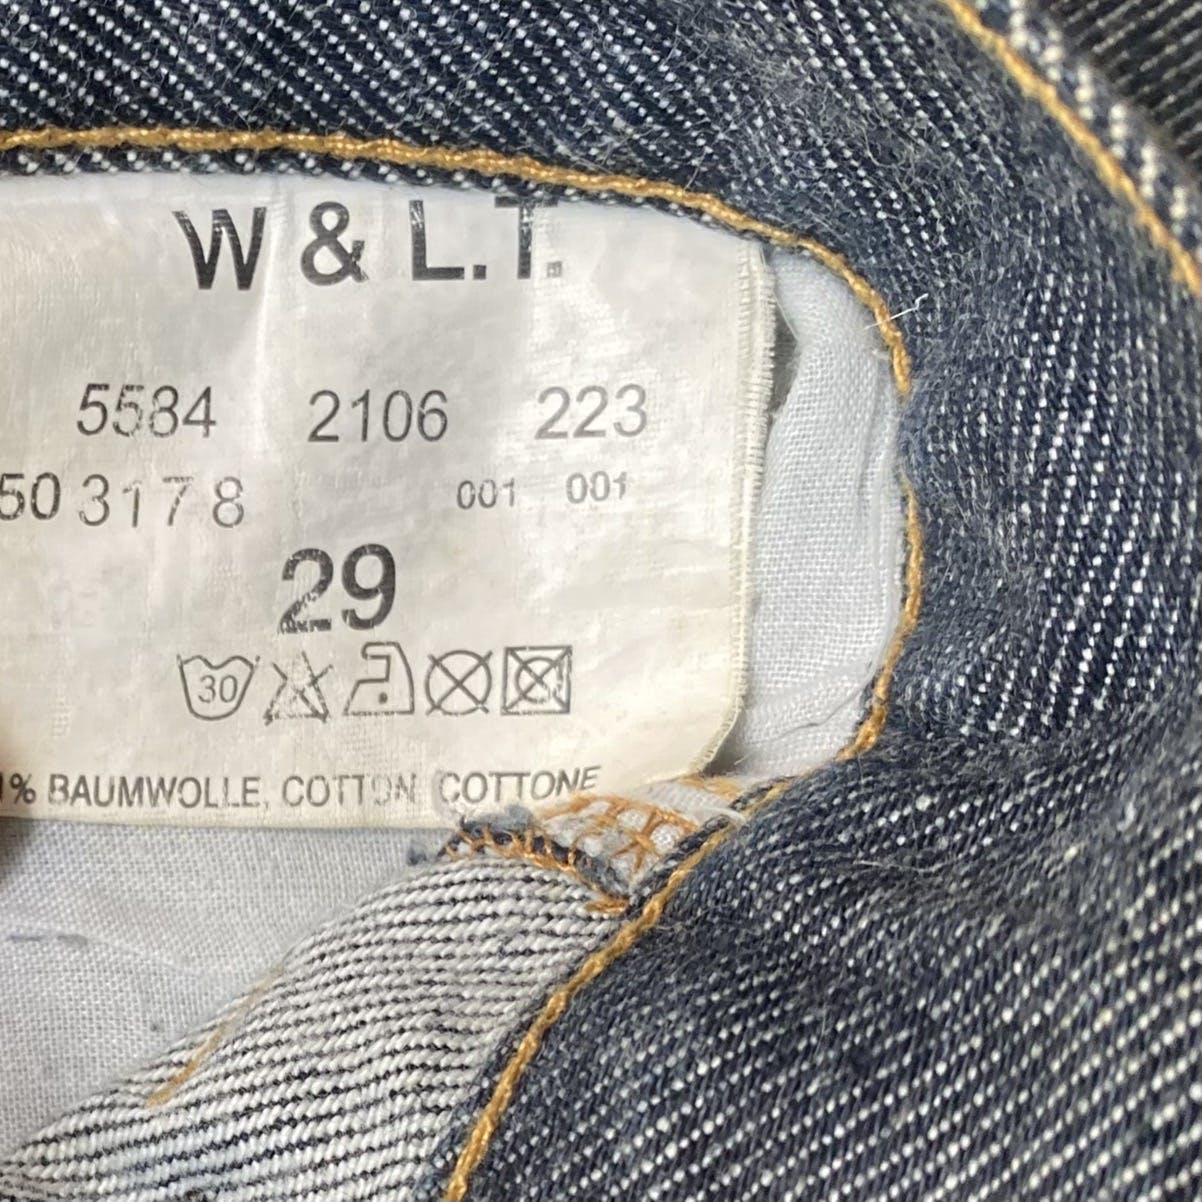 W&LT Double Pocket Jeans - 8